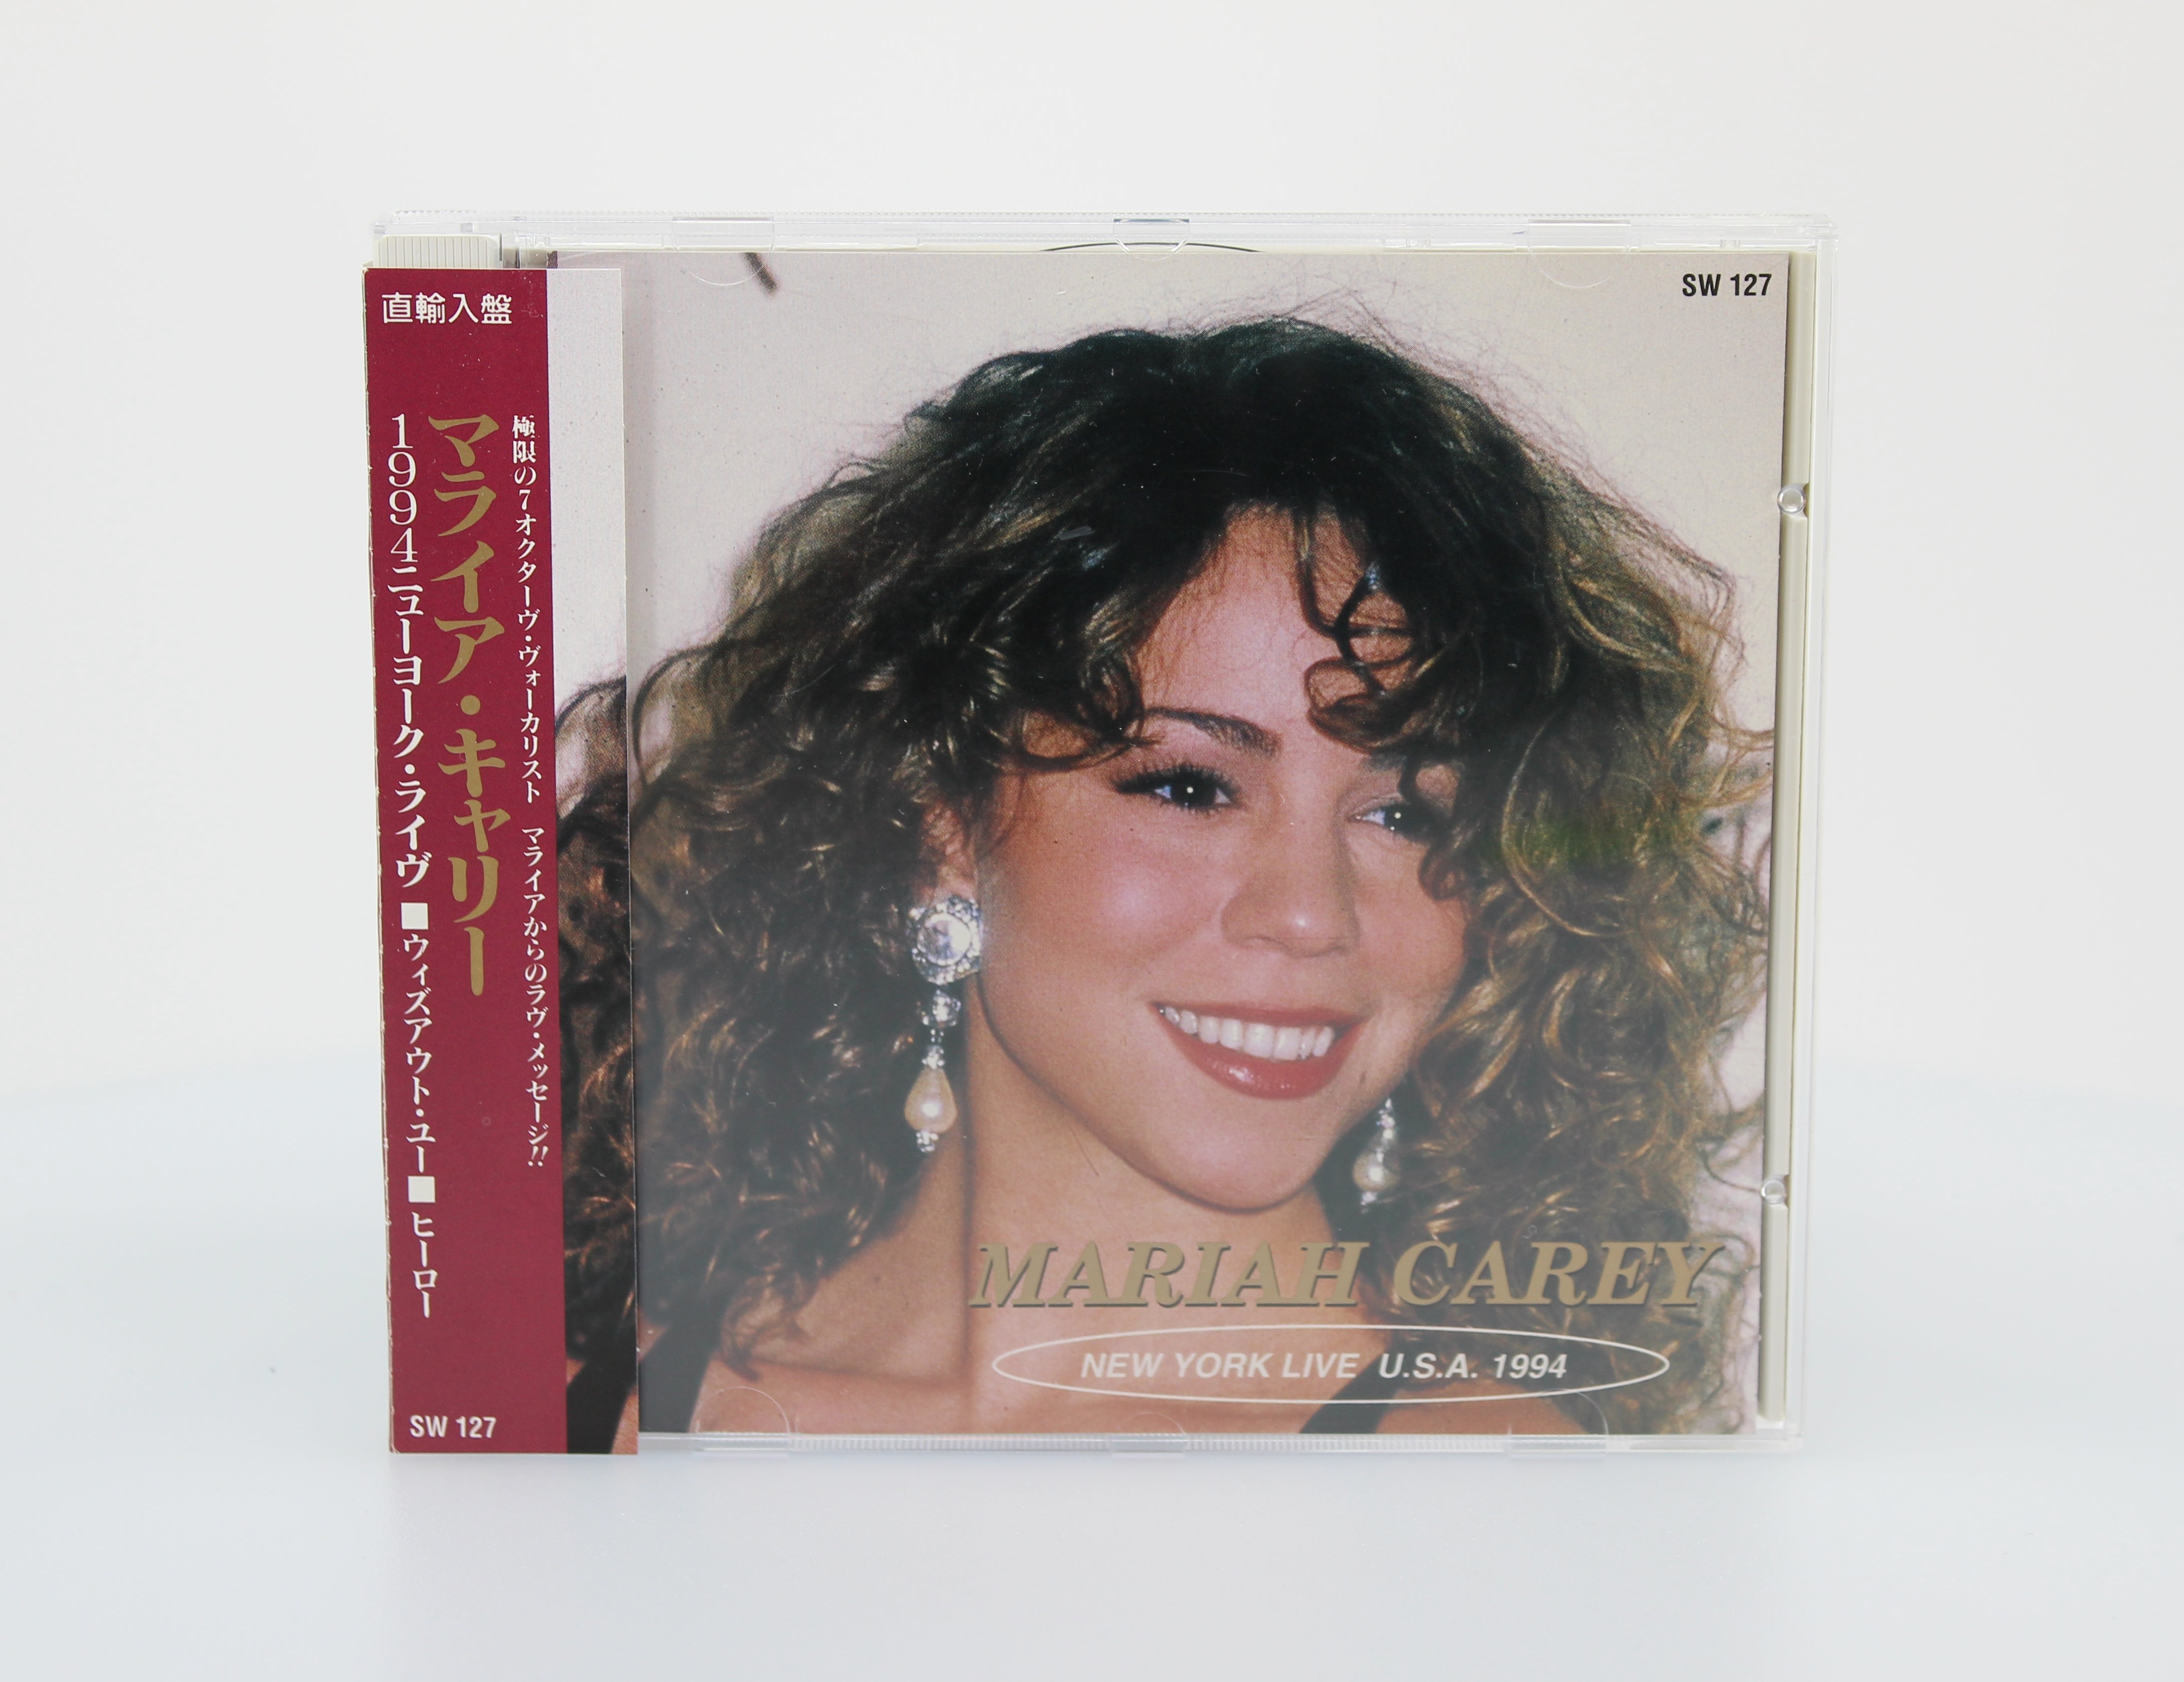 Mariah Carey, New York City Live U.S.A. 1994, CD Bootleg